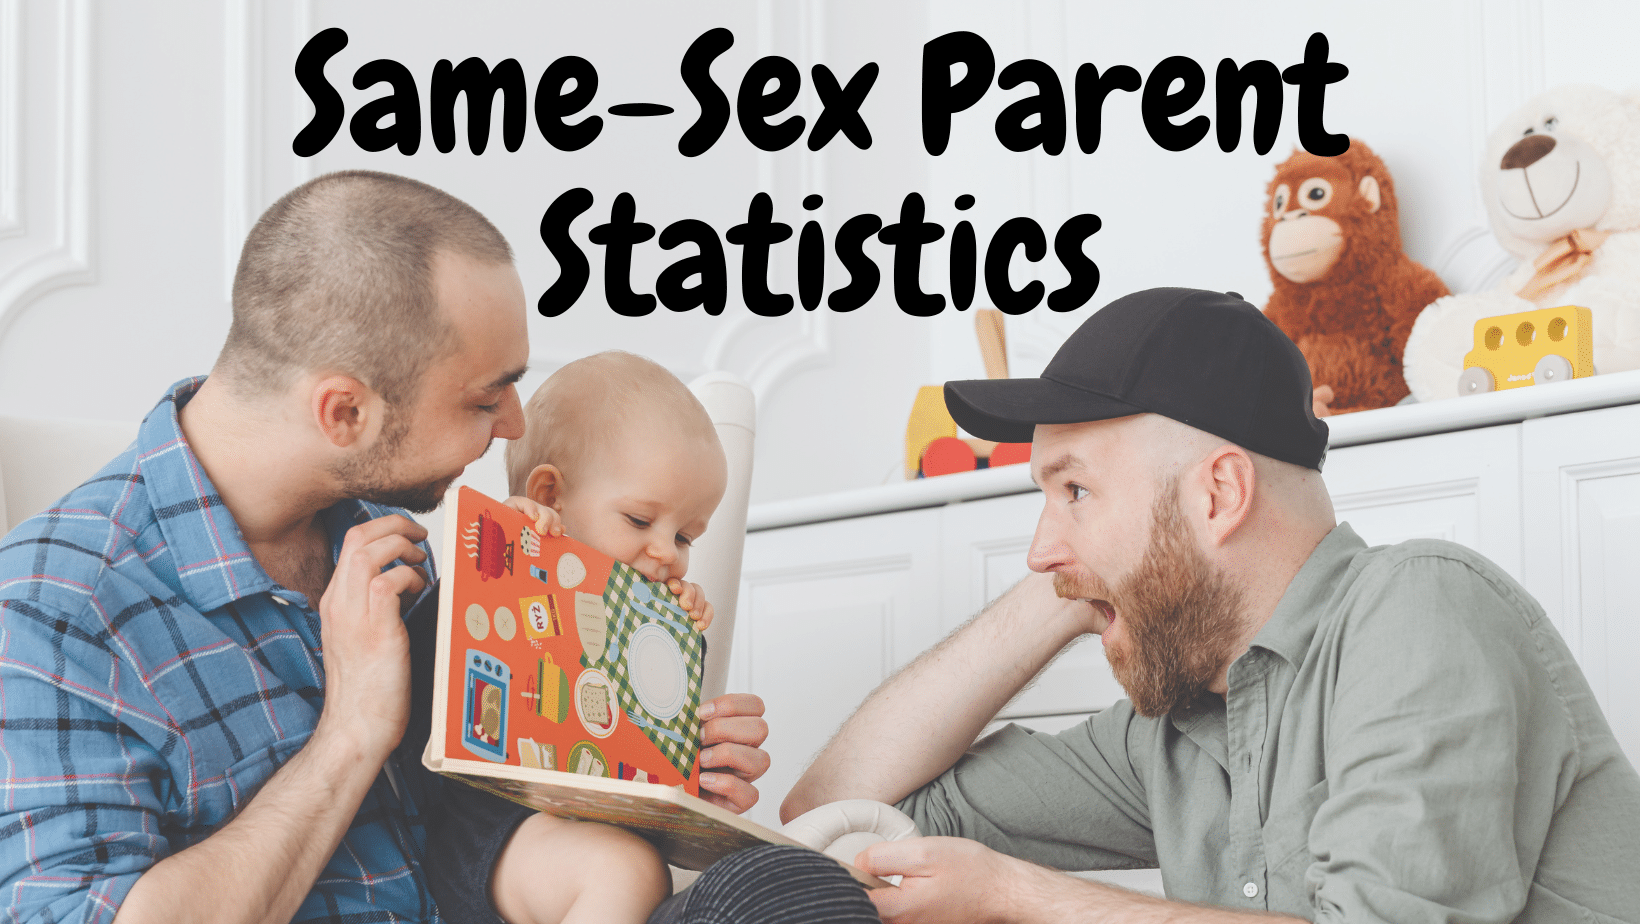 Same-Sex Parent Statistics: What Percent of Gay Men and Lesbian Women Are Parents?